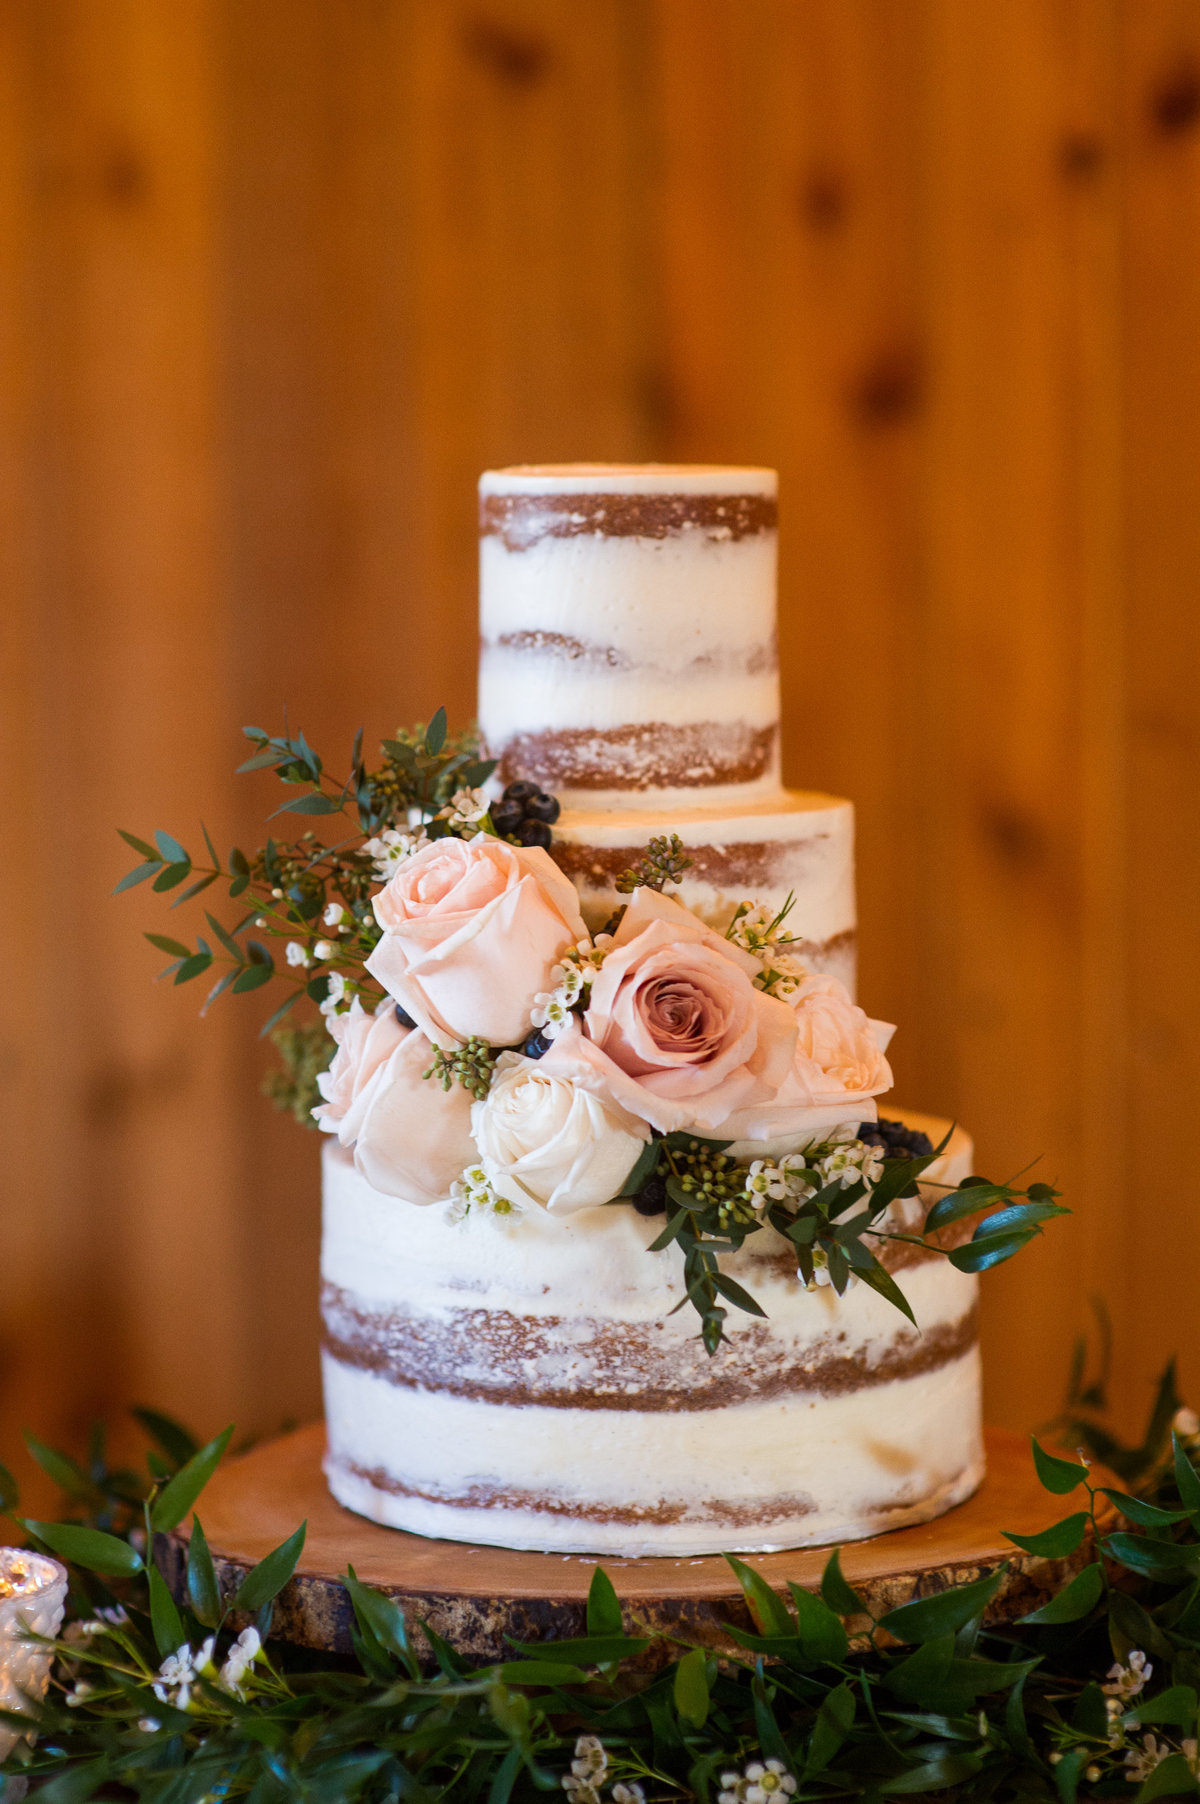 Whippt Wedding Cake - Semi-Naked design - credit paulina ochoa photography3